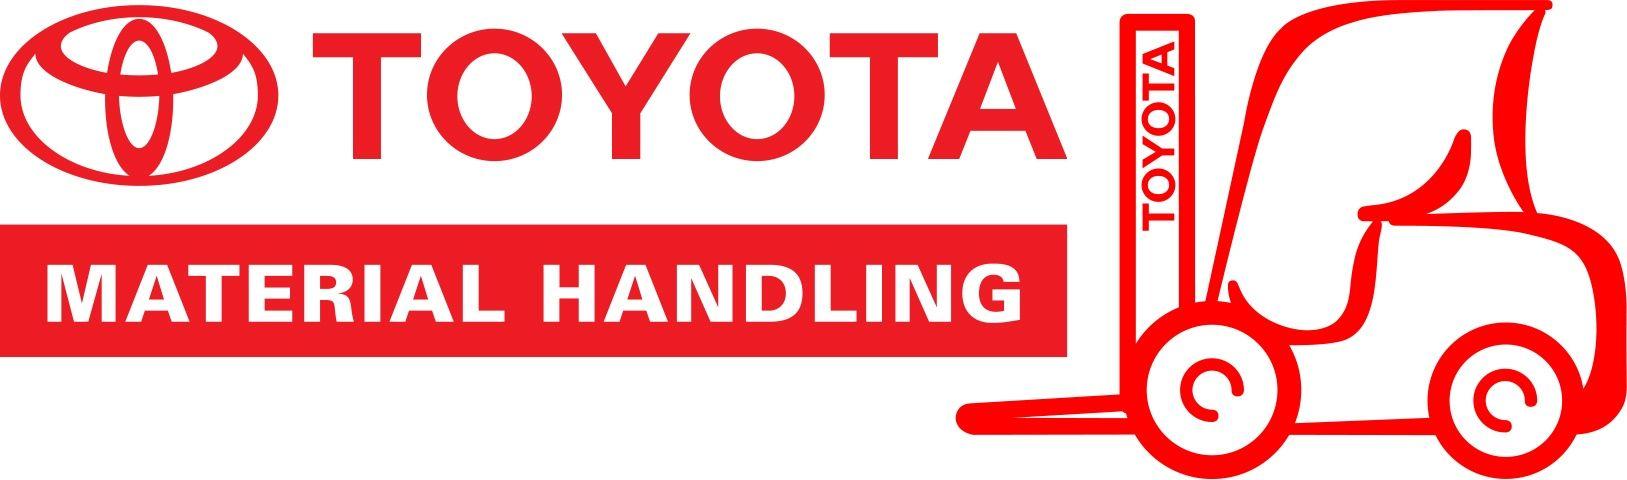 Toyota Forklift Logo - 2018 Forklift Operator of the Year - Brisbane Markets Limited